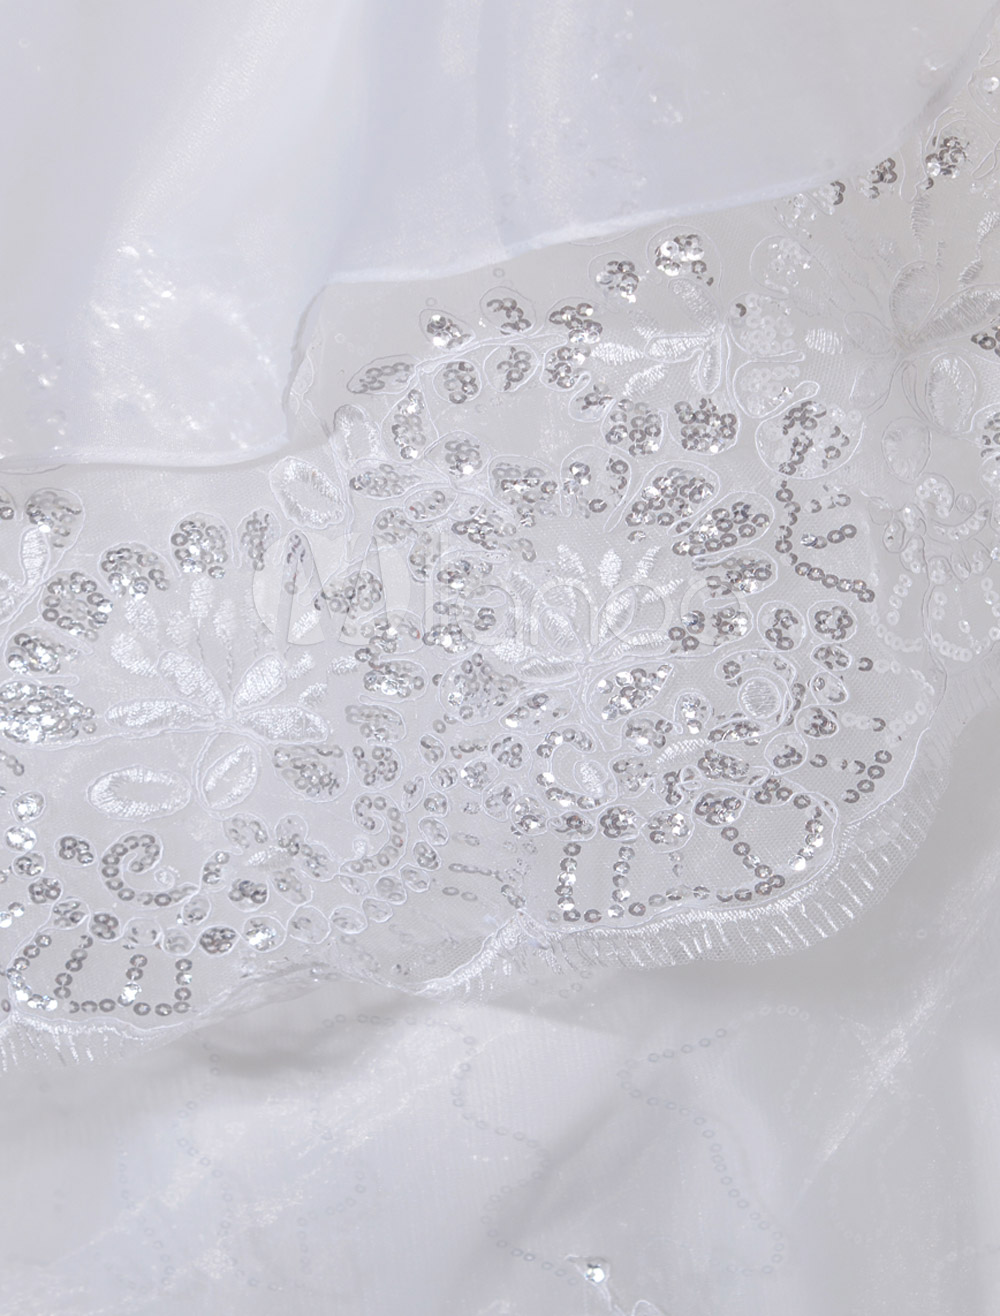 A-line Off-The-Shoulder Bow Organza Ivory Bridal Wedding Gown - Milanoo.com